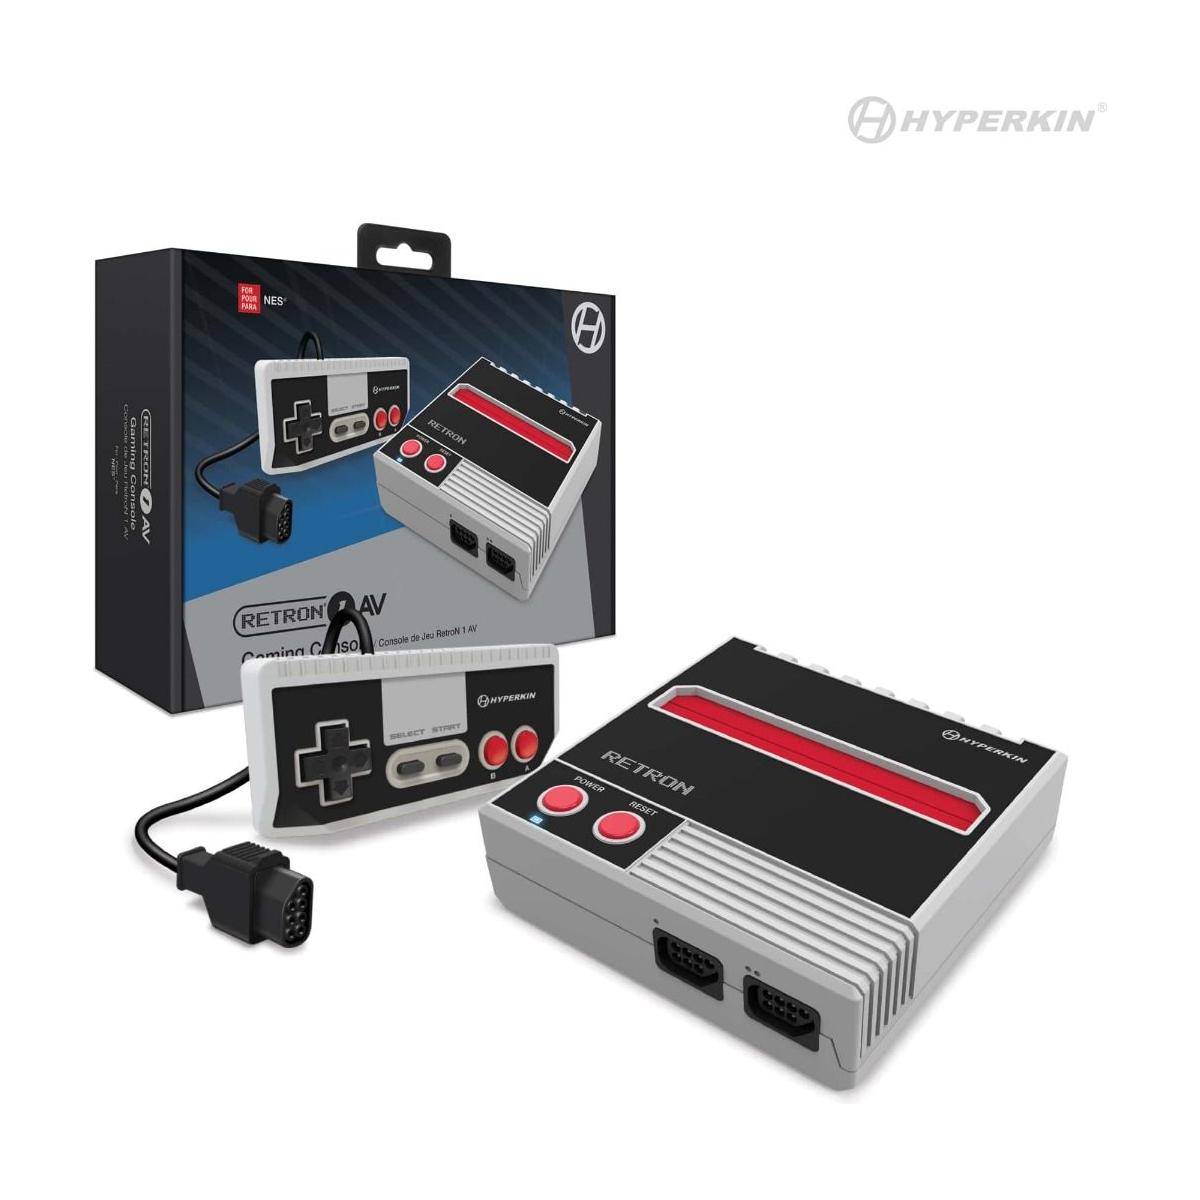 Console AV Retron 1 (NES) (NES colorée)